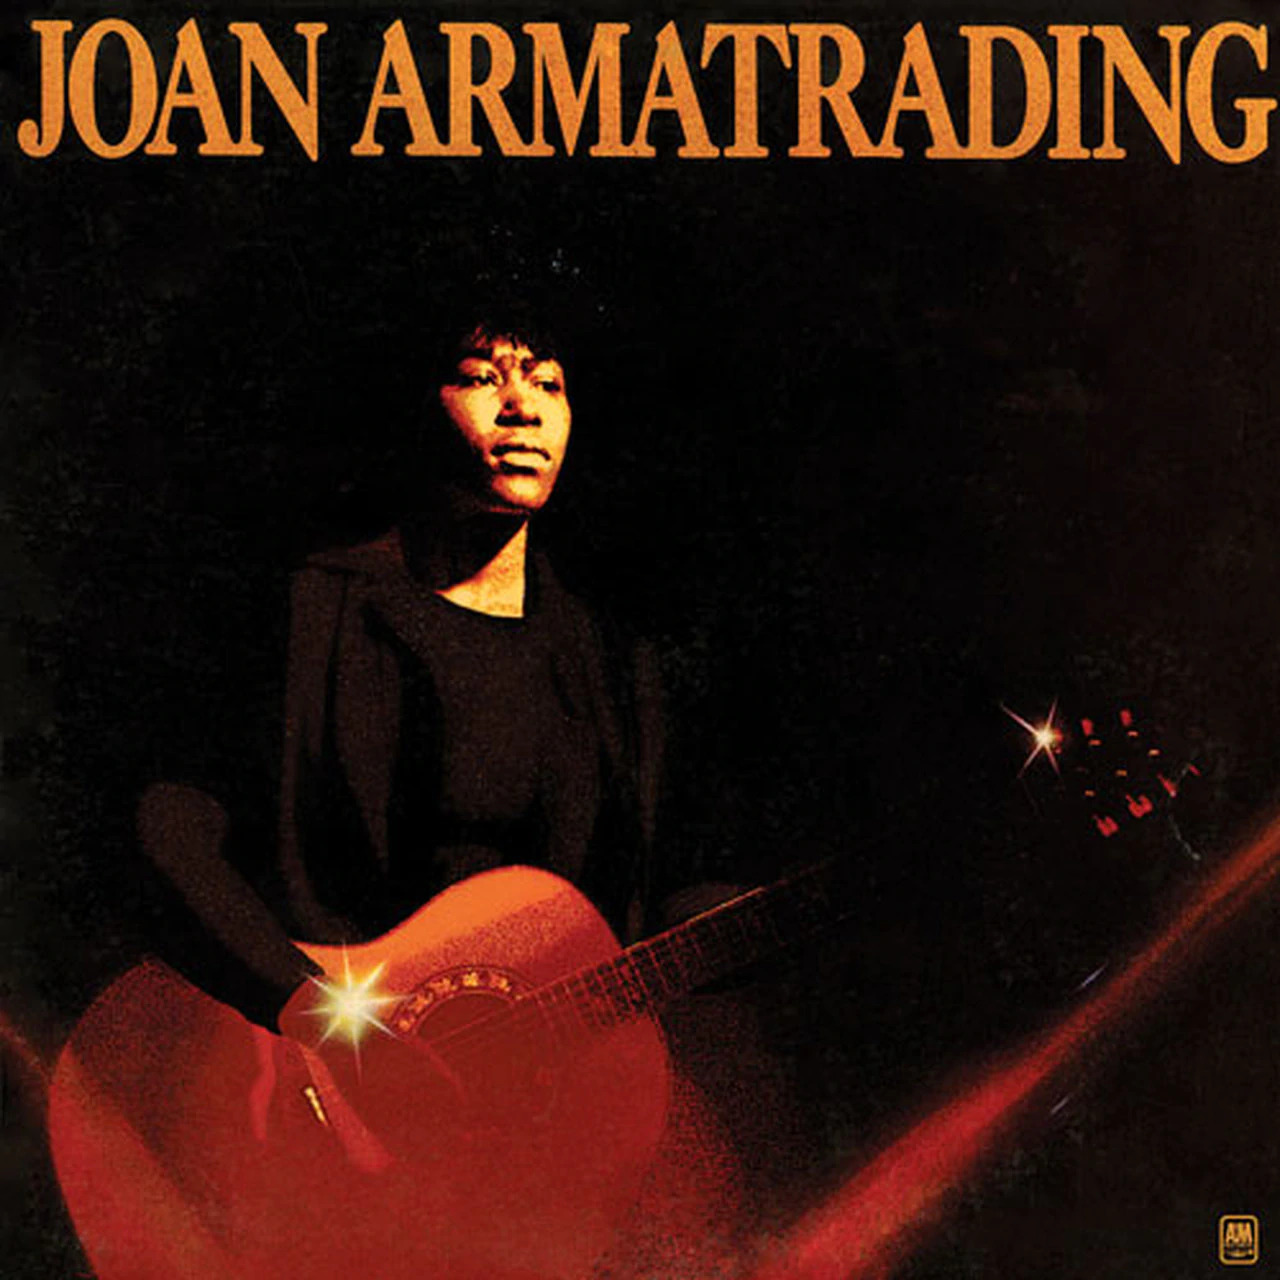 Joan Armatrading - Joan Armatrading - 180g Vinyl LP